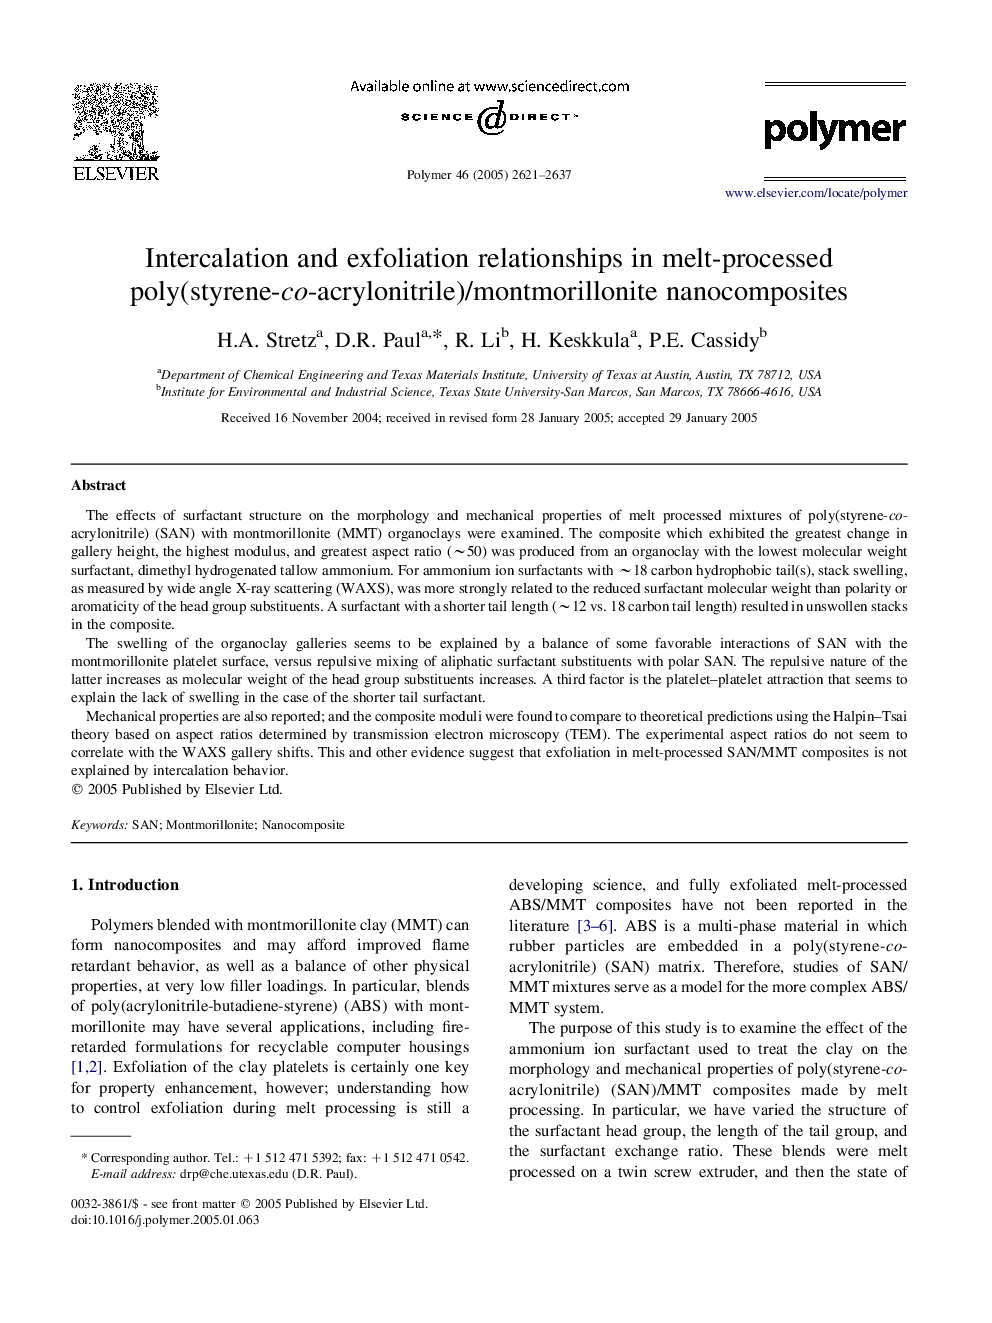 Intercalation and exfoliation relationships in melt-processed poly(styrene-co-acrylonitrile)/montmorillonite nanocomposites